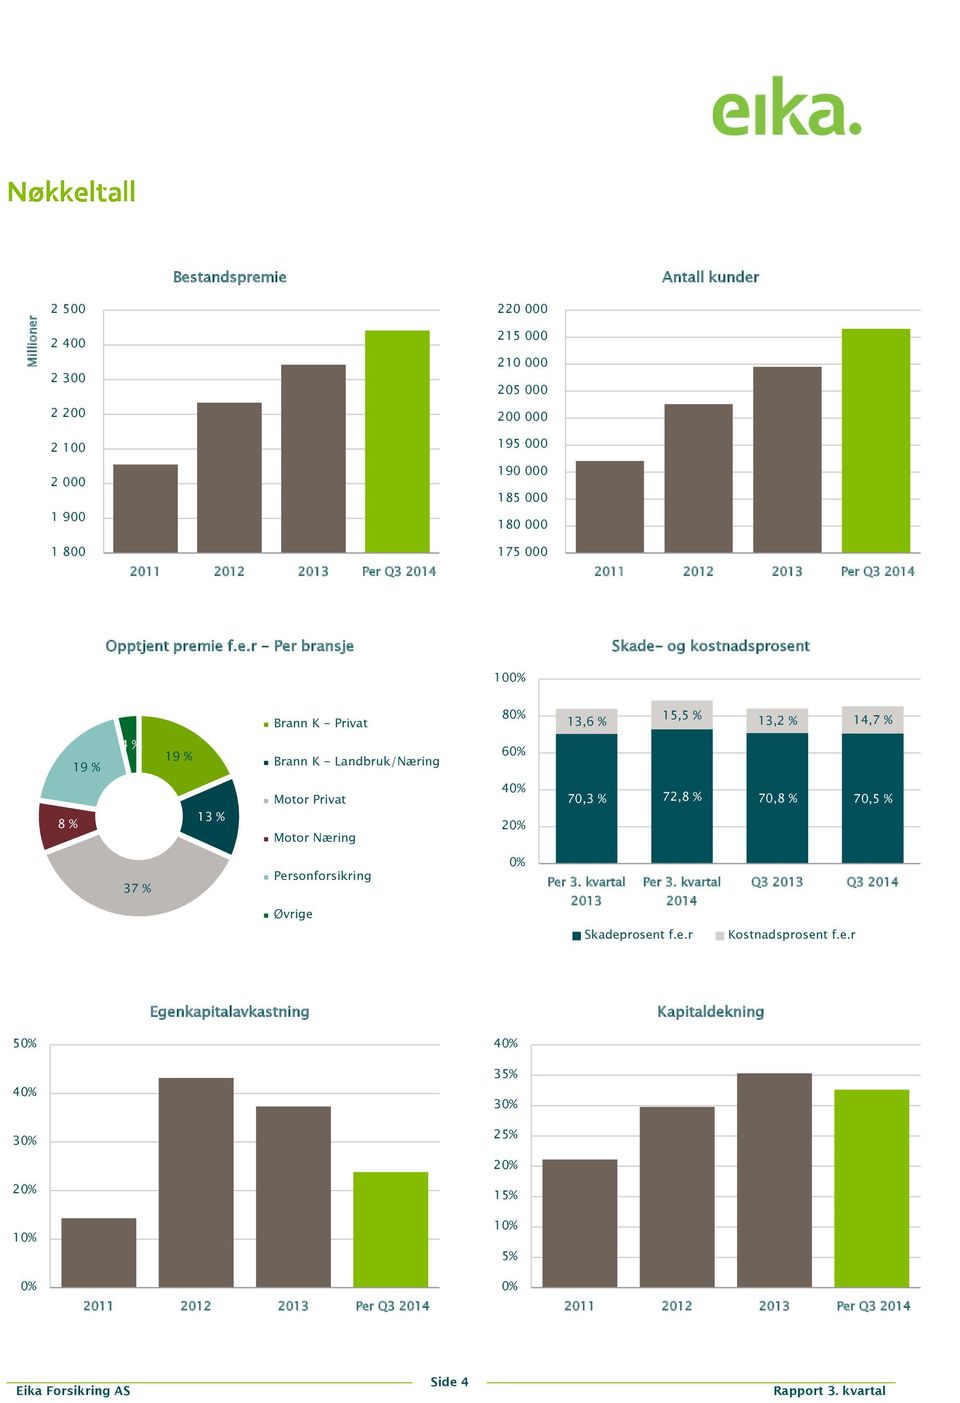 Landbruk/Næring 60% 8 % 13 % Motor Privat Motor Næring 40% 20% 70,3 % 72,8 % 70,8 % 70,5 % 37 % Personforsikring Øvrige 0% Per 3. kvartal 2013 Per 3.